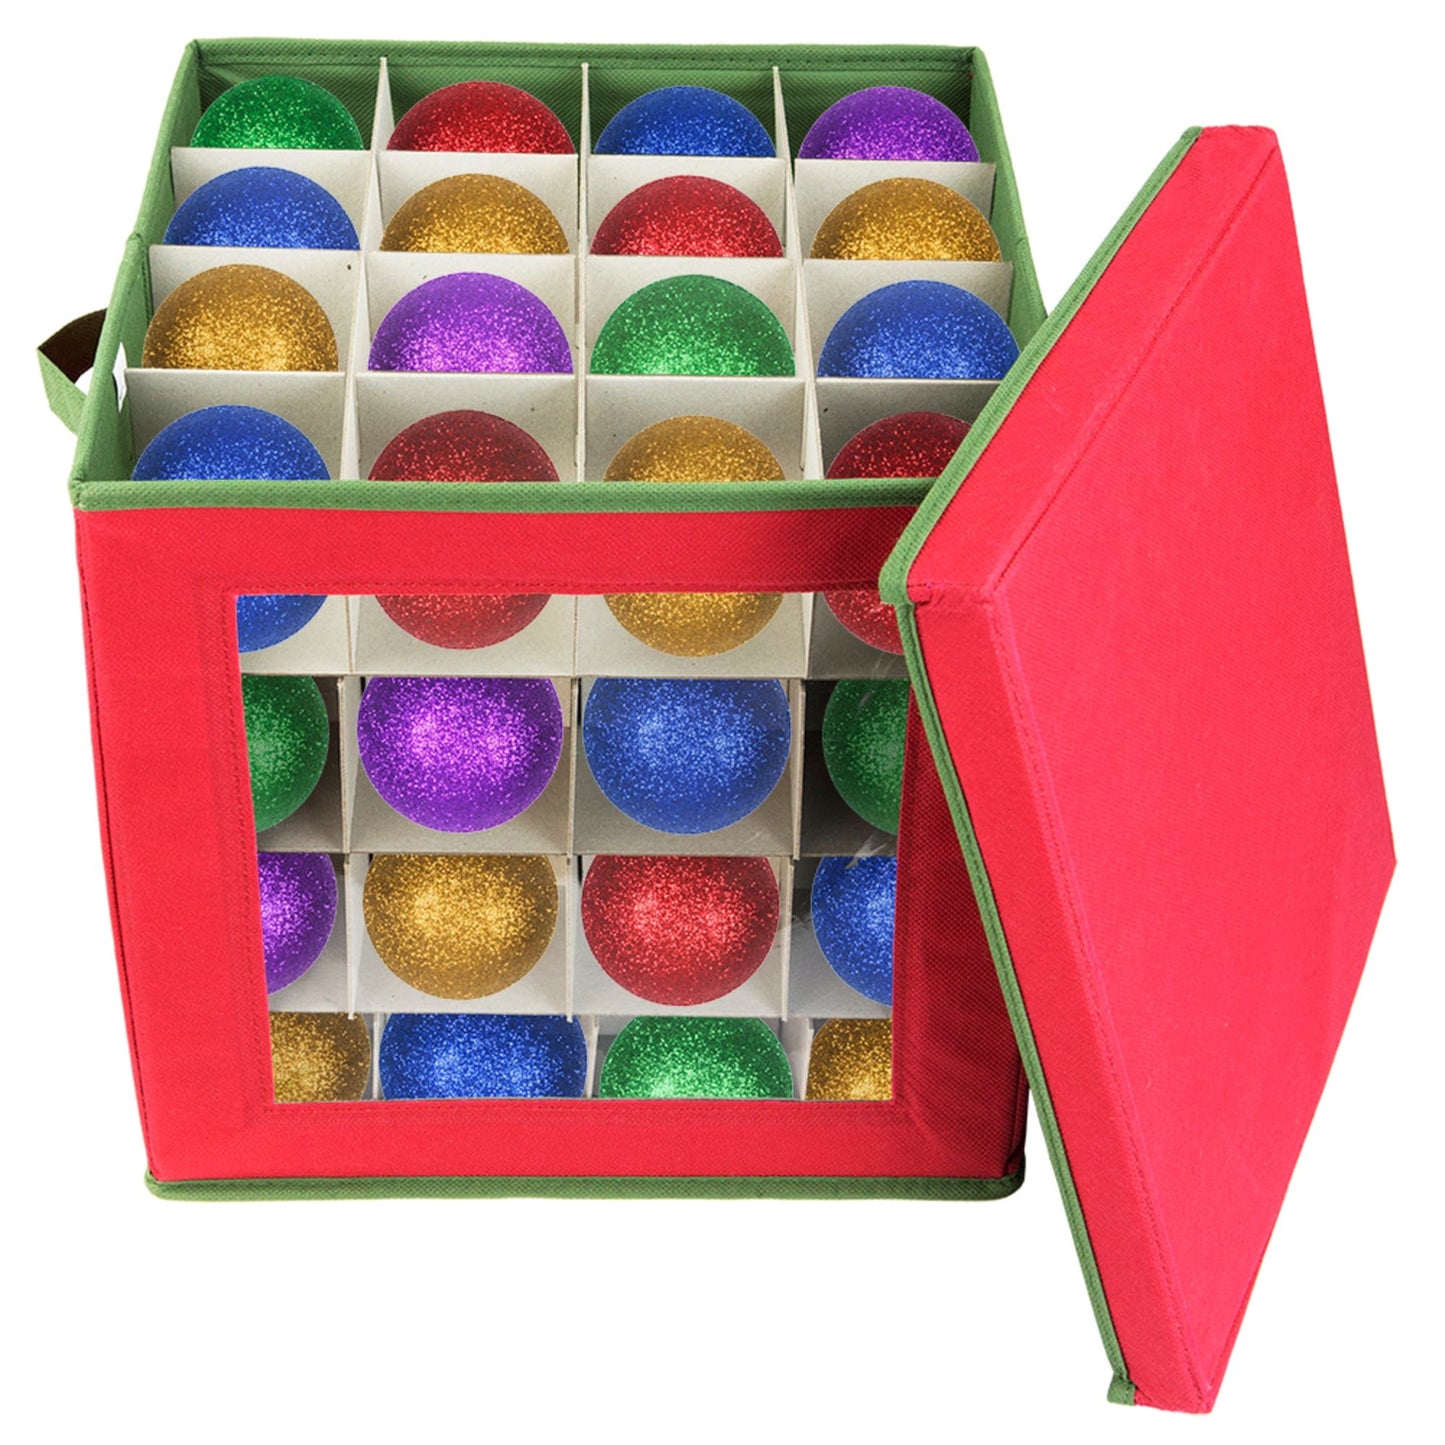 Ornament Storage Cube